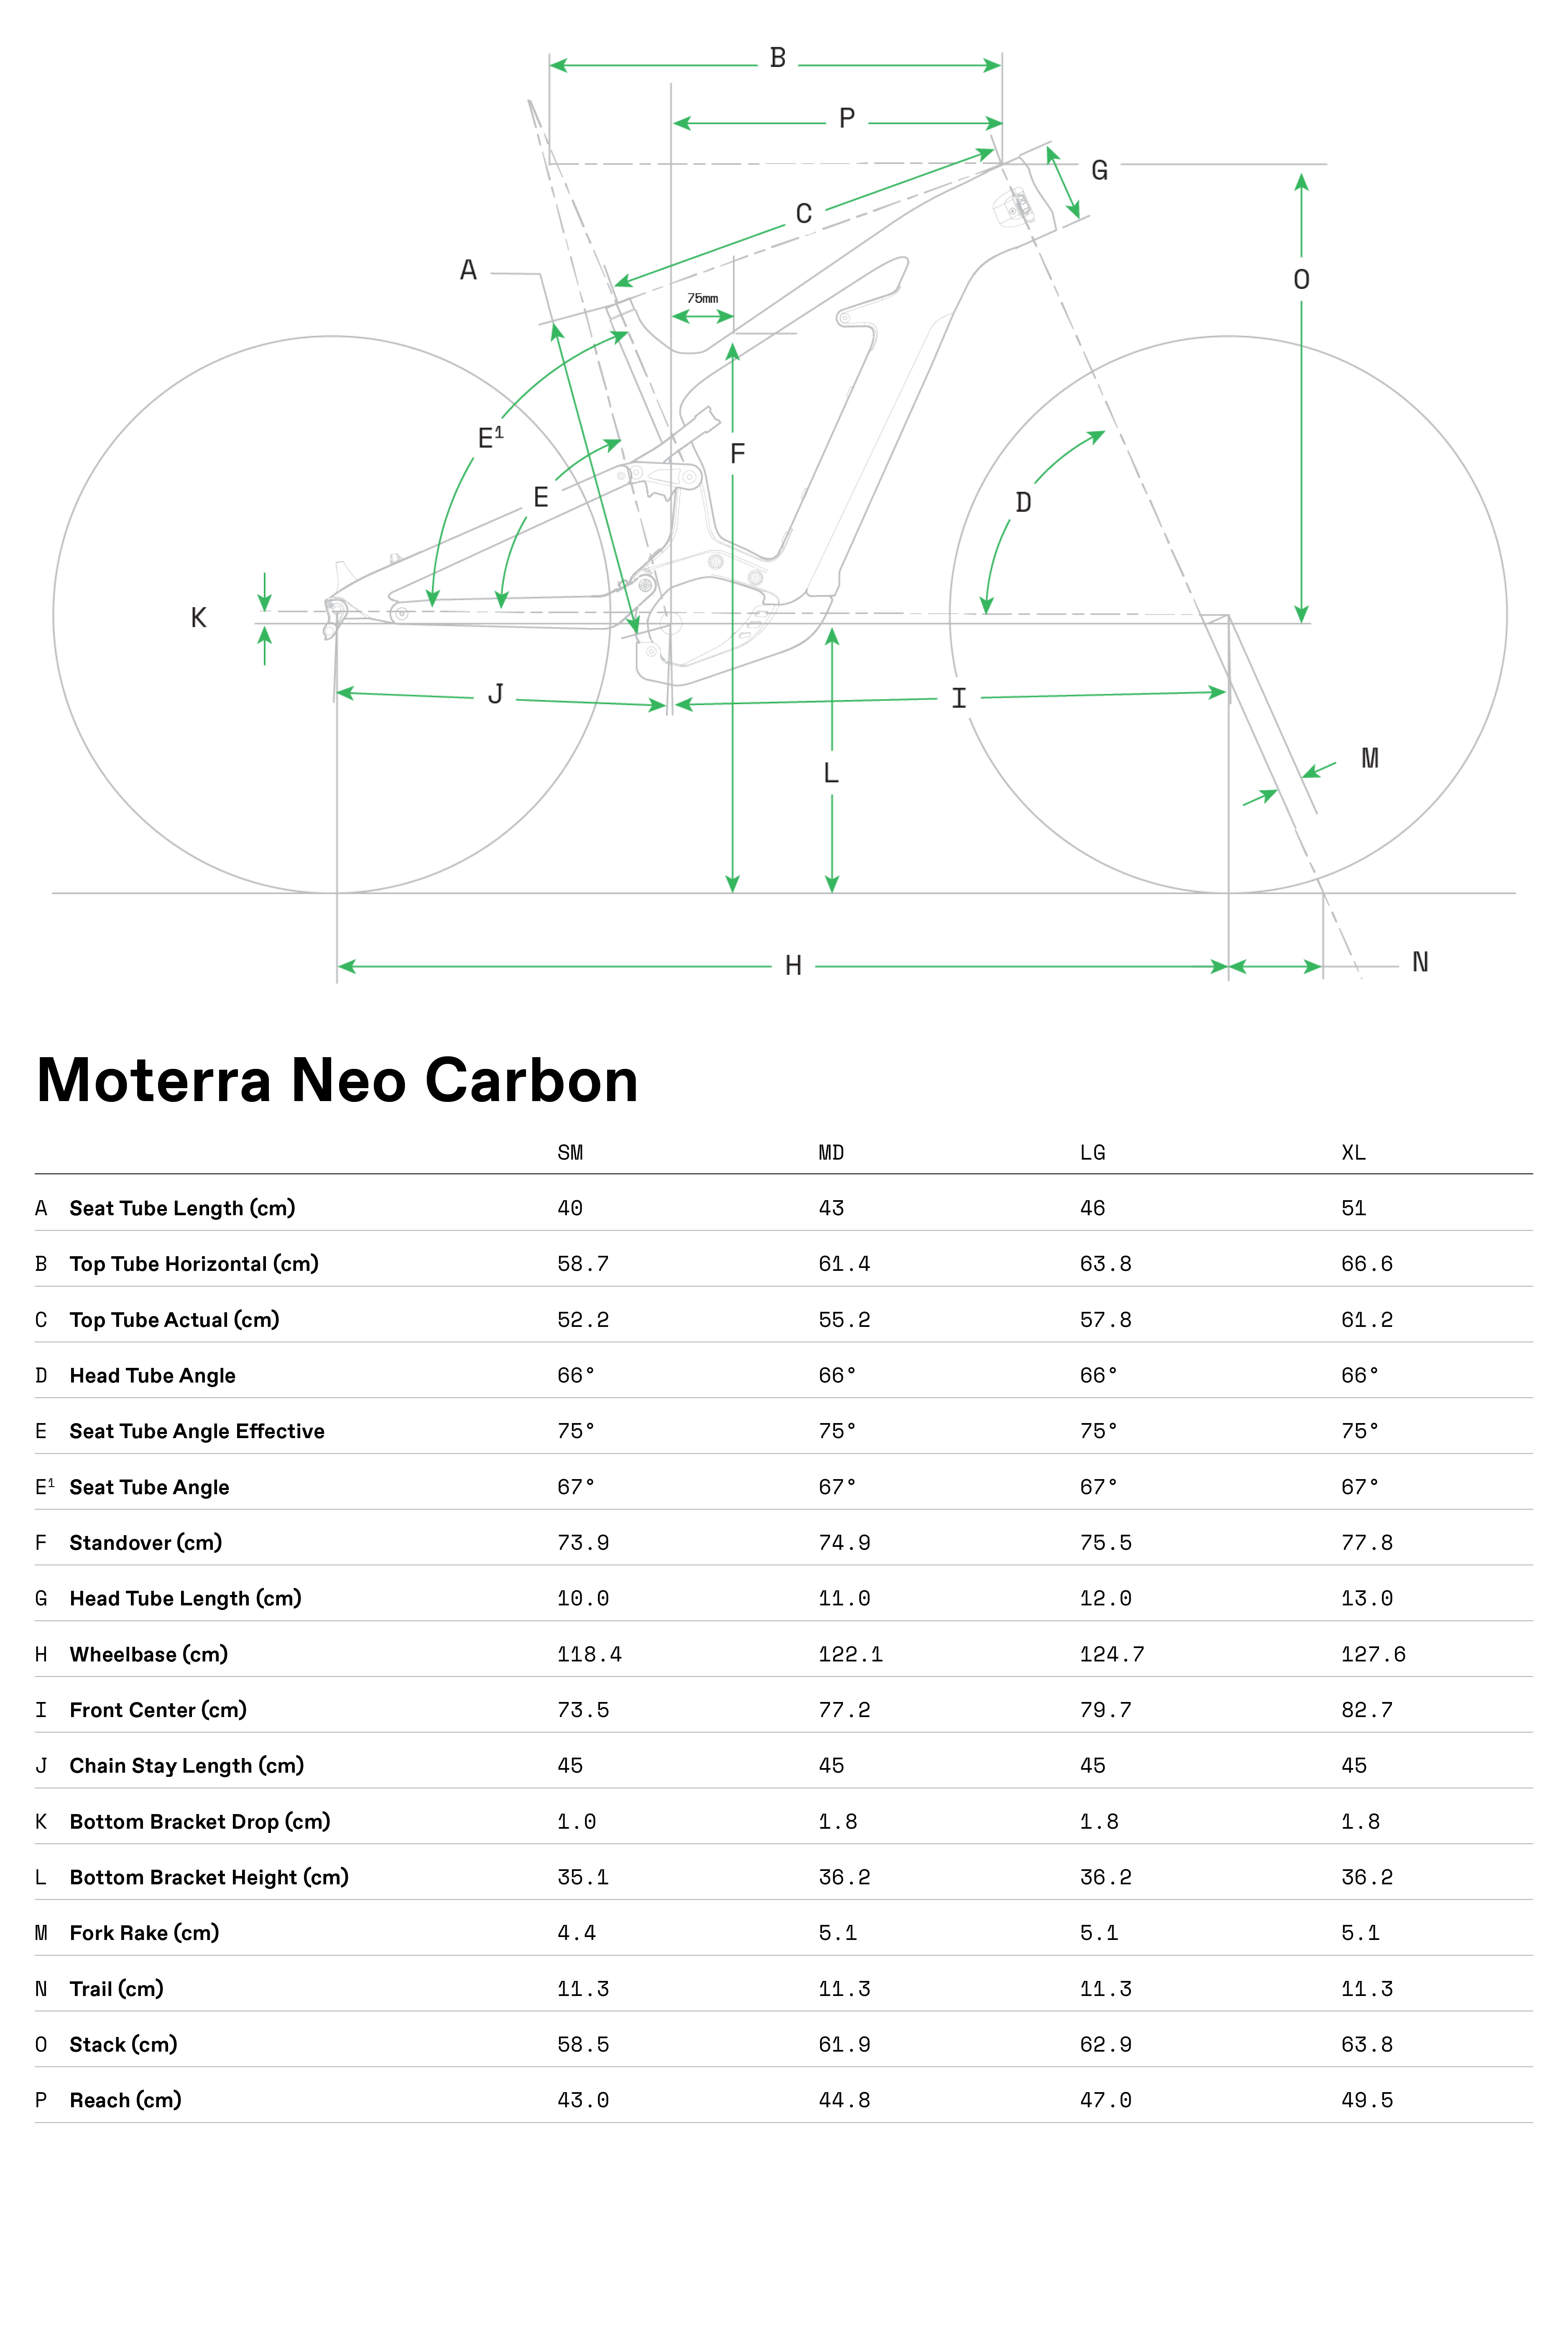 Moterra Neo Carbon